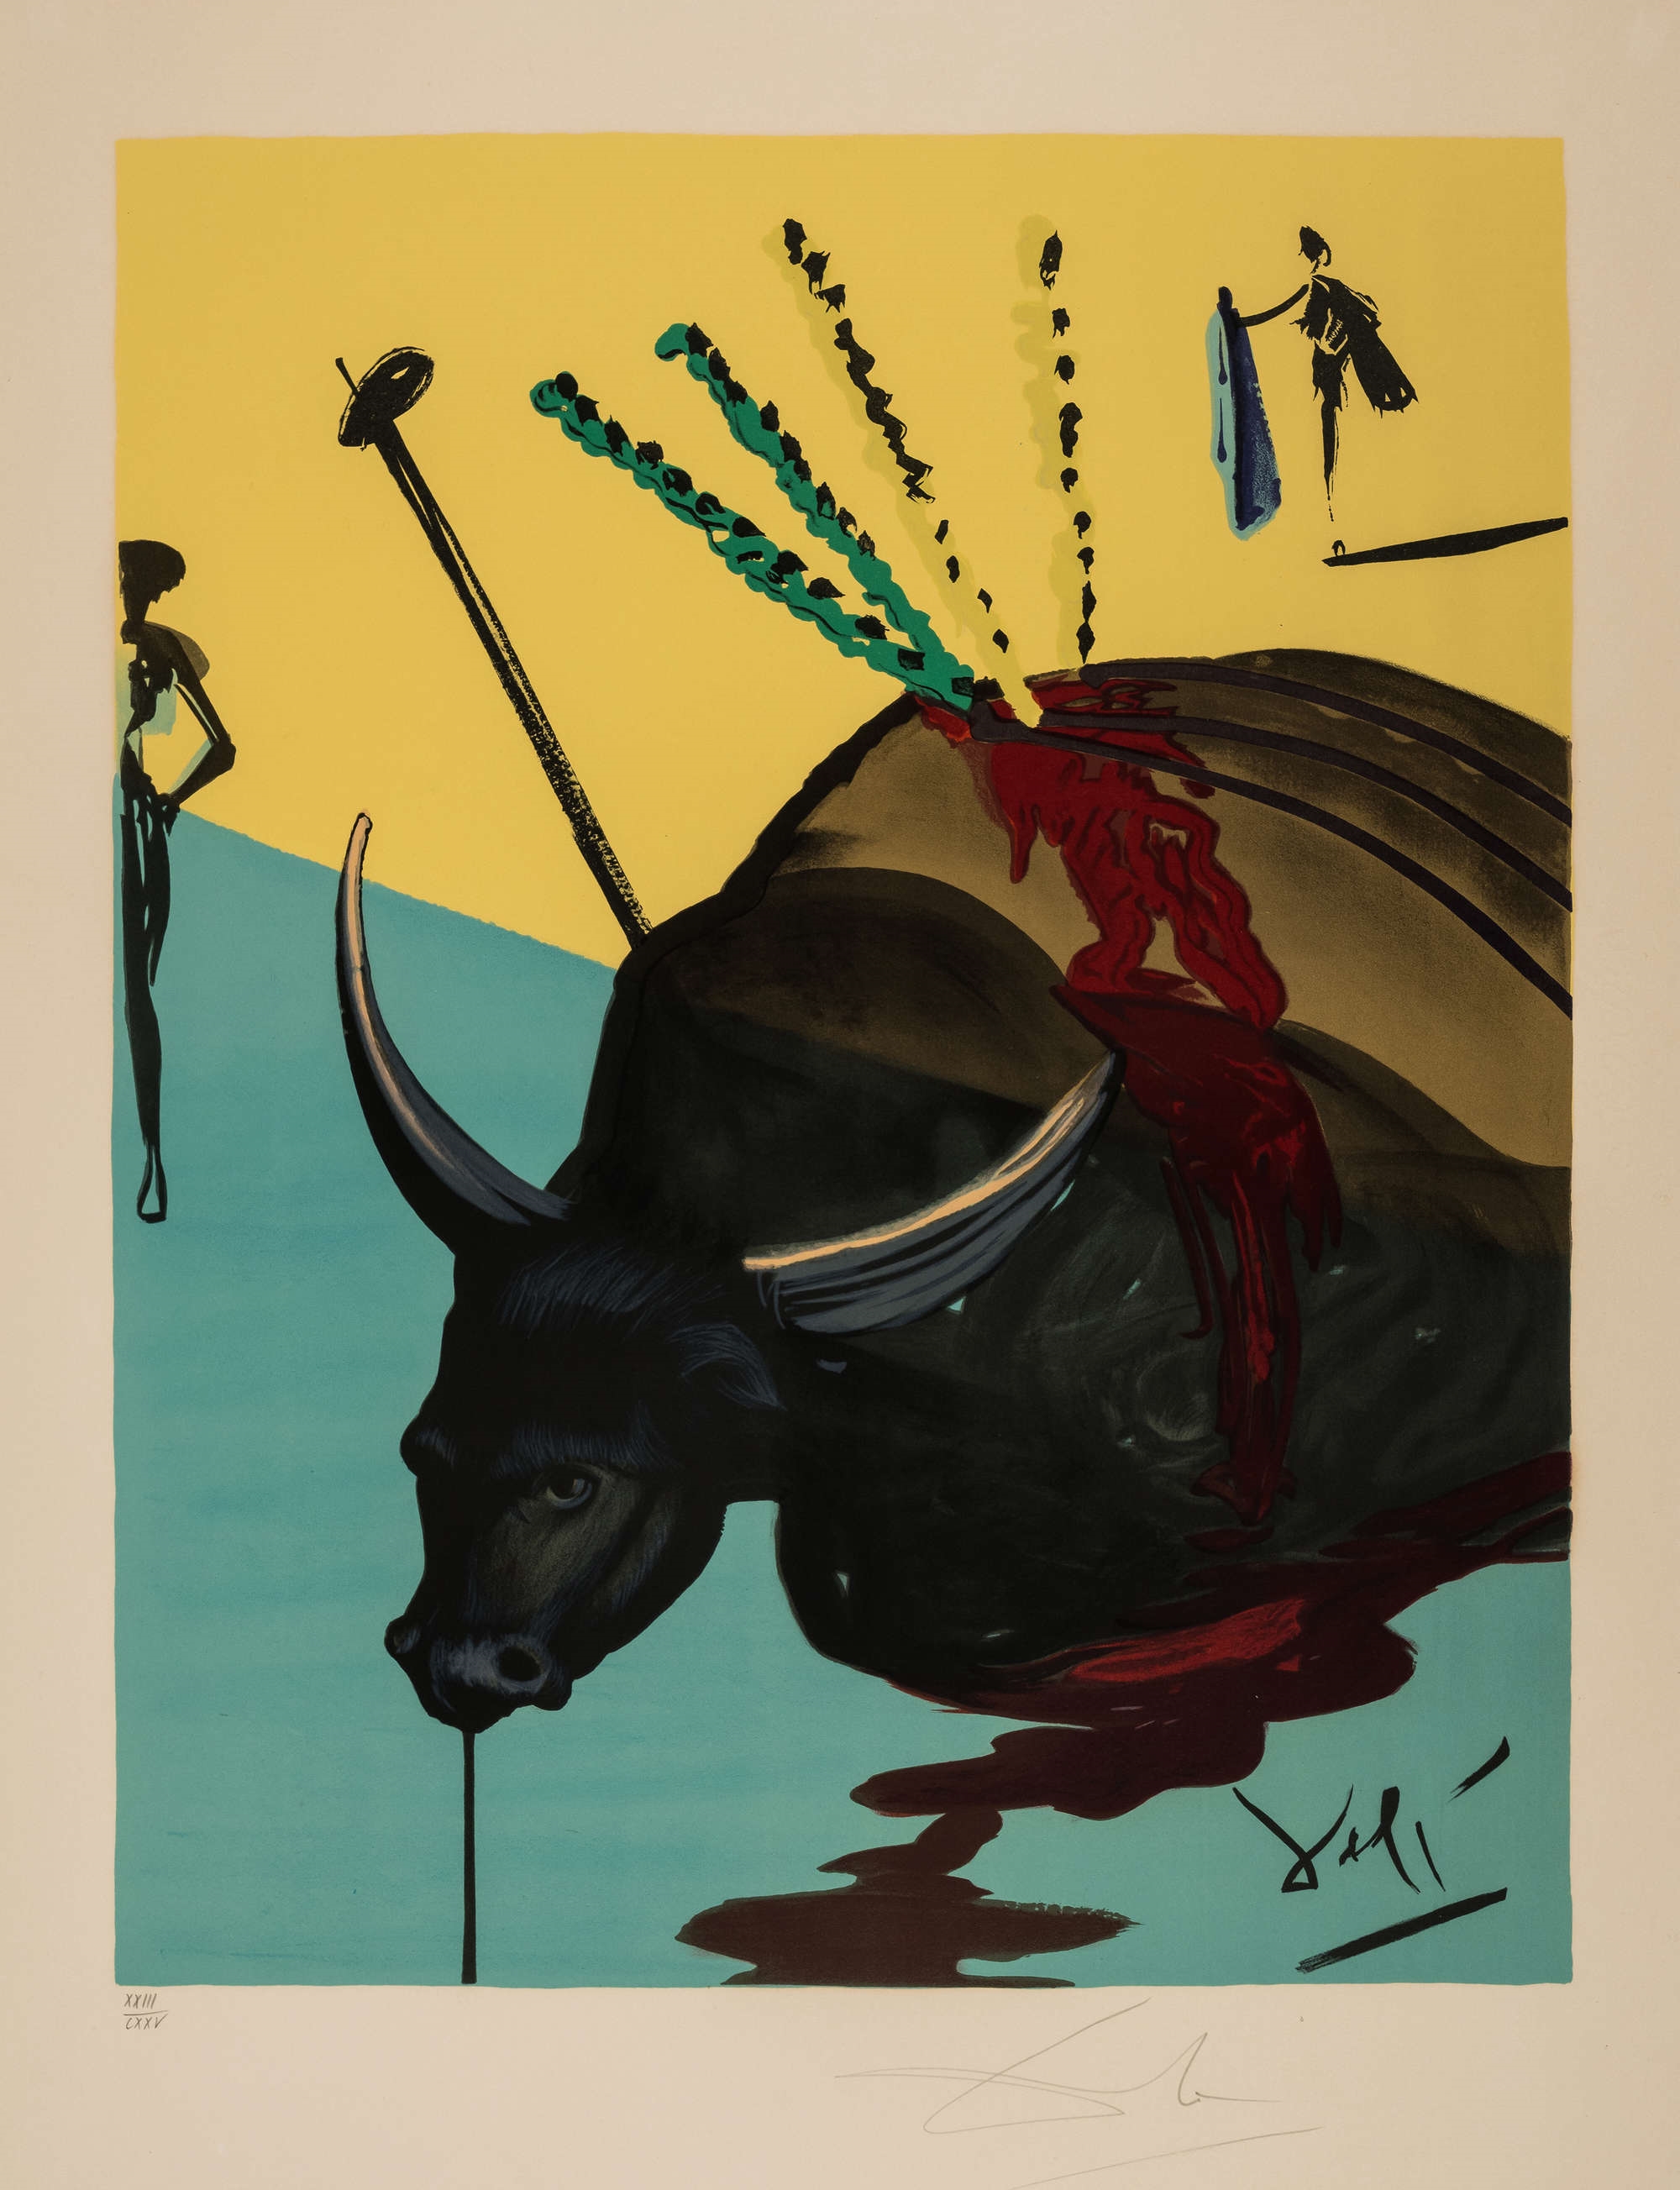 The Bull is Dead by Salvador Dalí, 1970